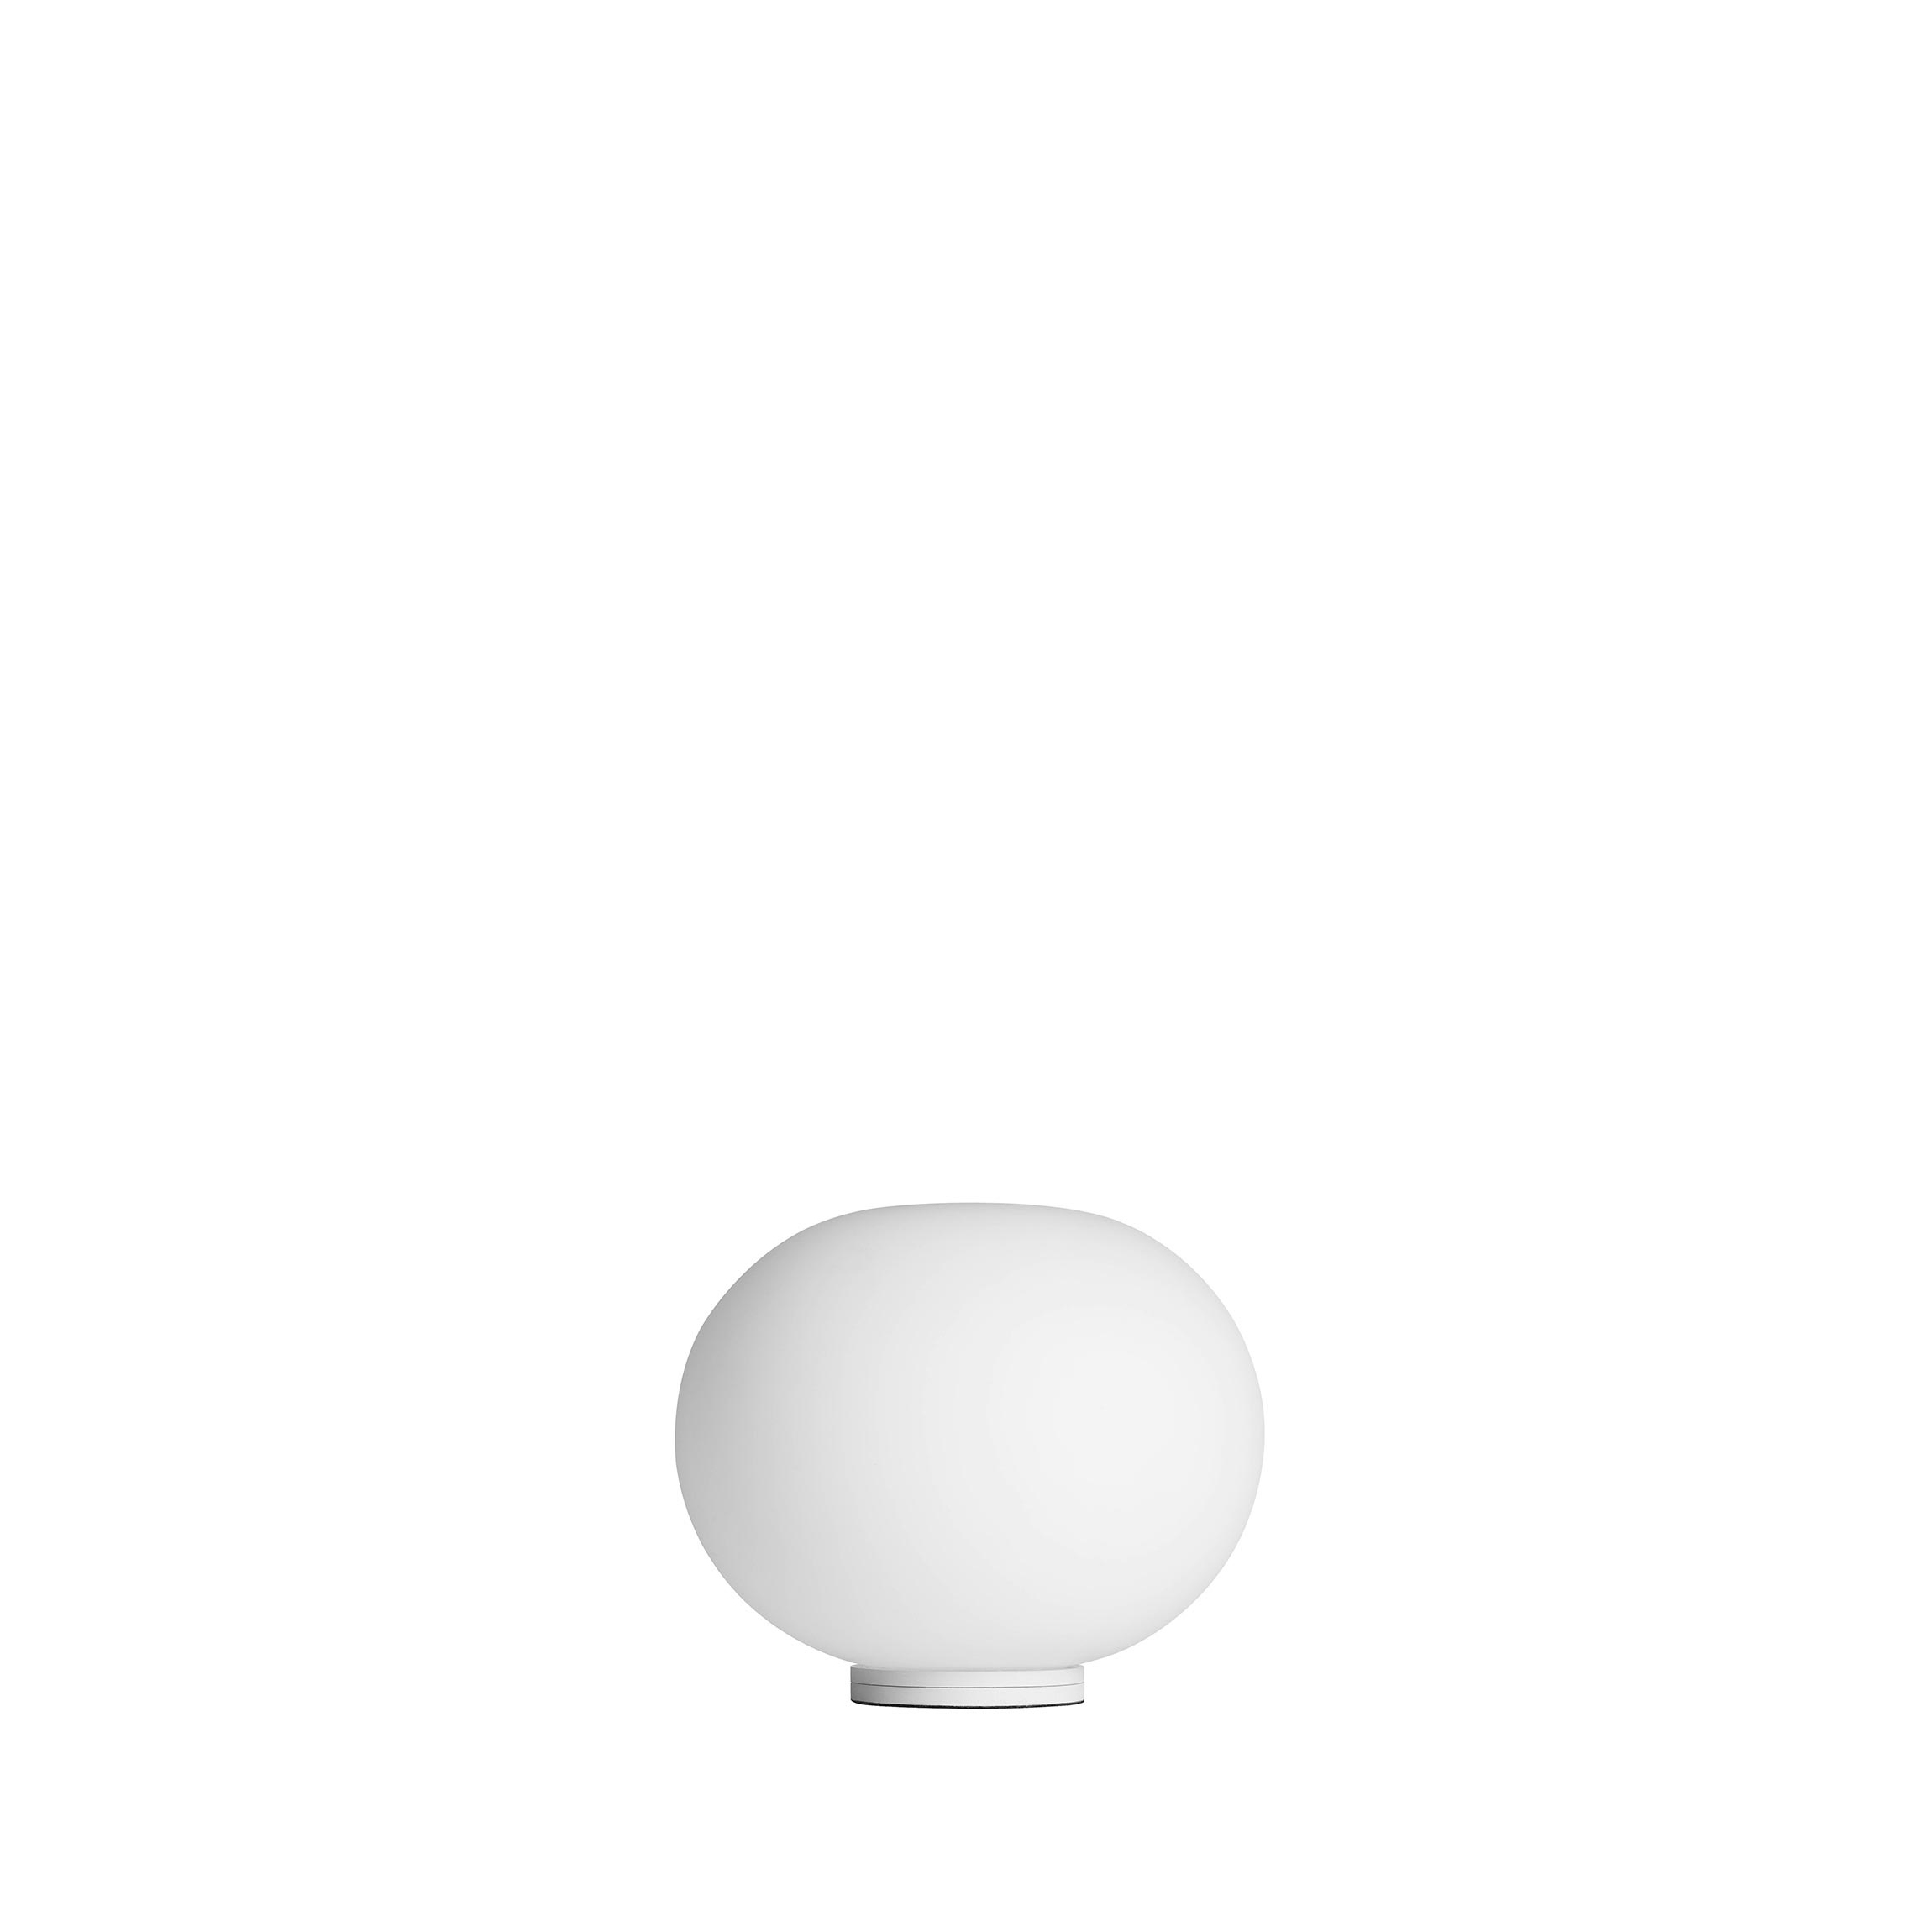 glo-ball-basic-table-zero-switch-morrison-flos-F3331009-product-still-life-big.jpg